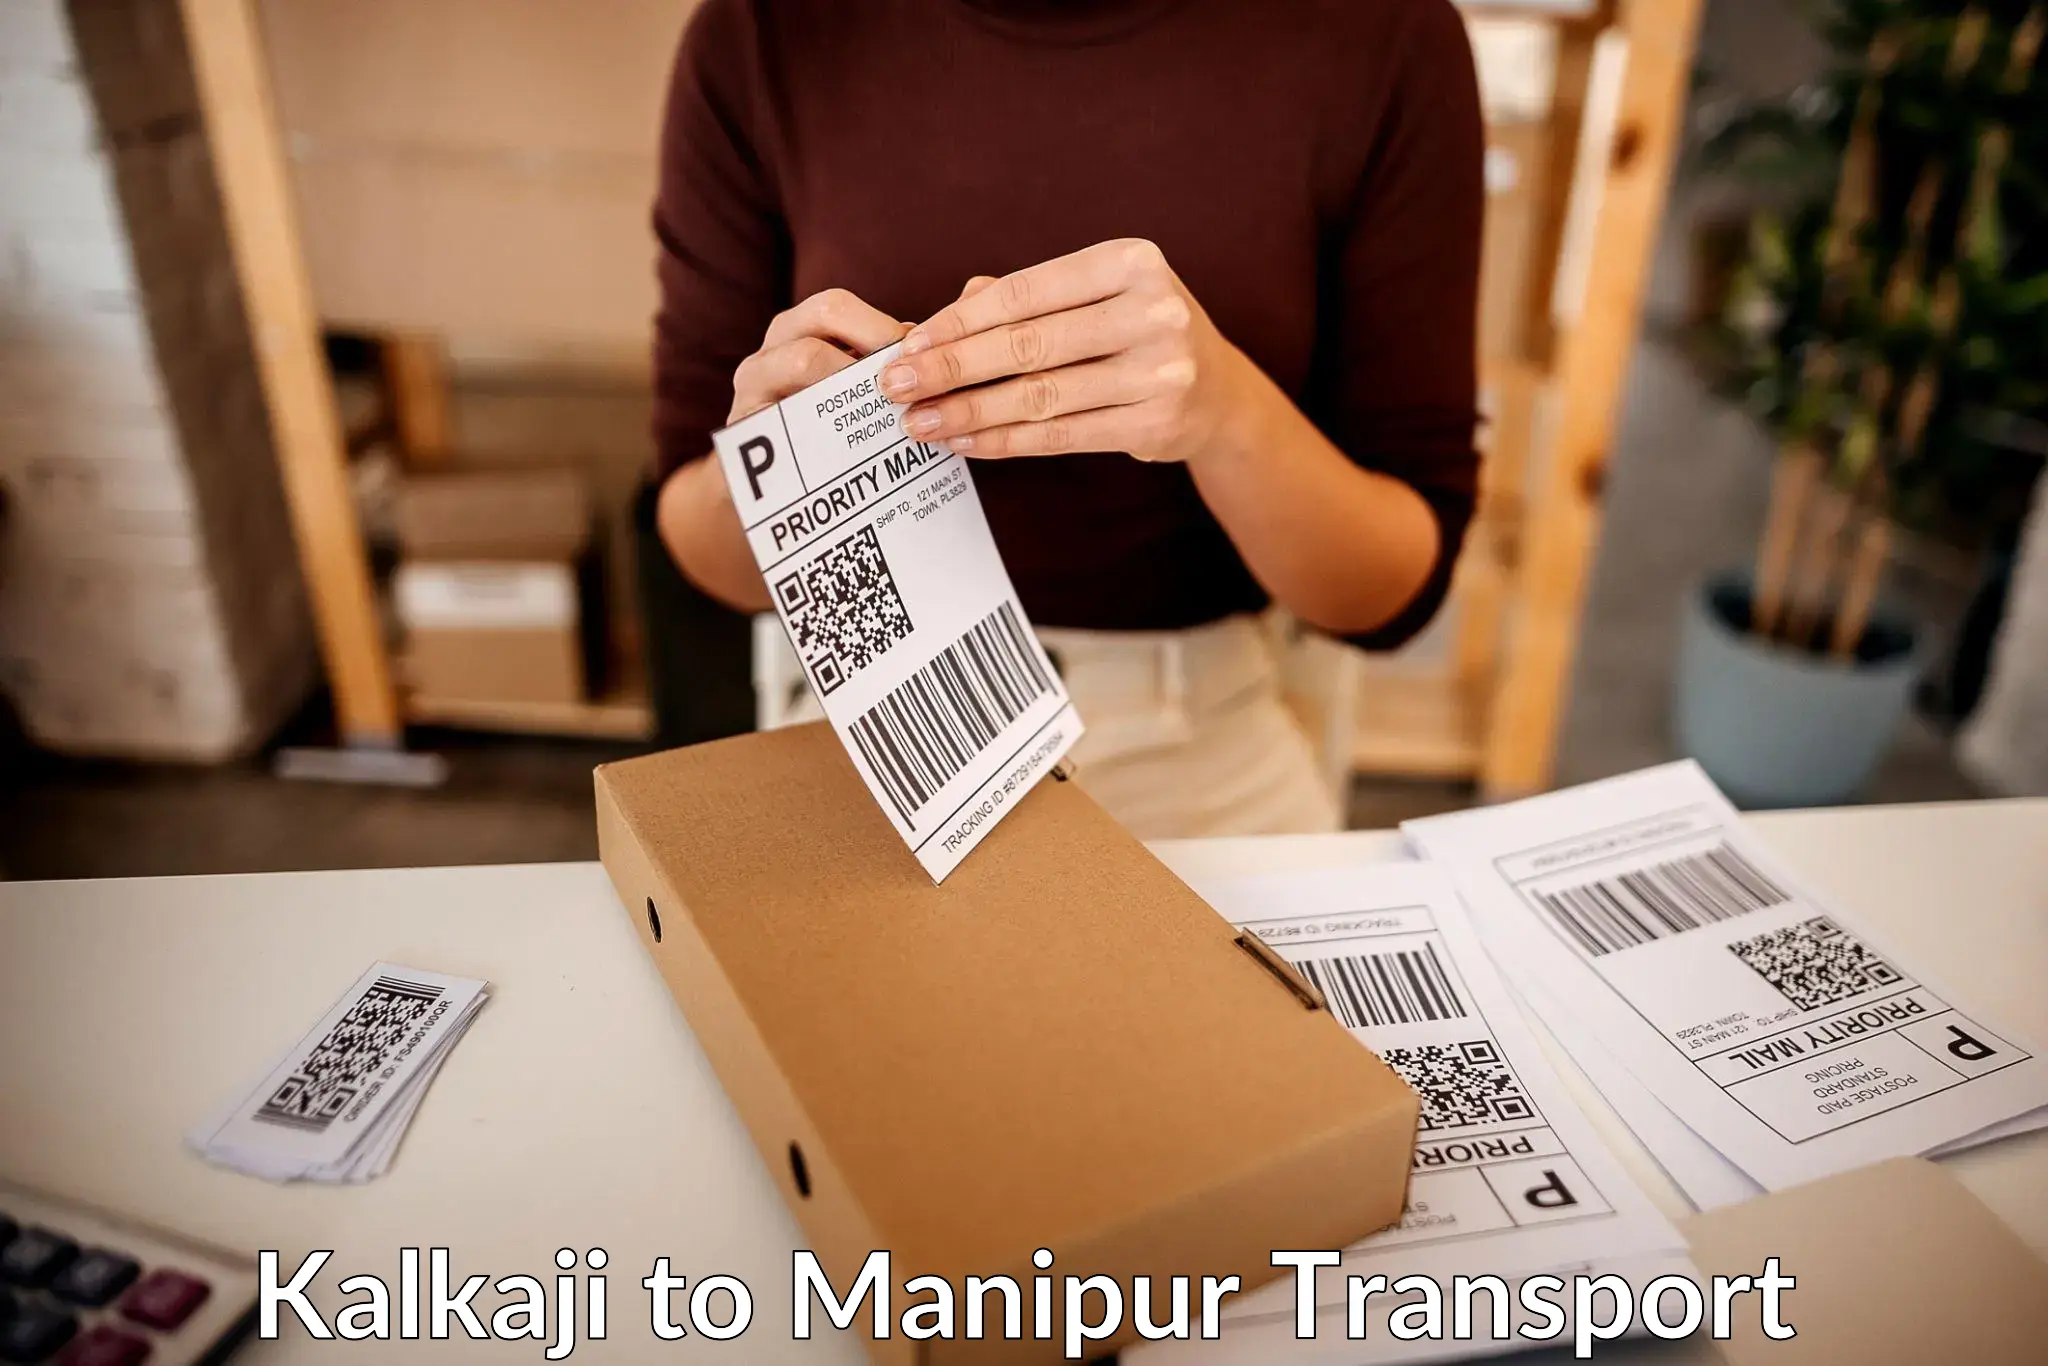 Nearby transport service Kalkaji to Manipur